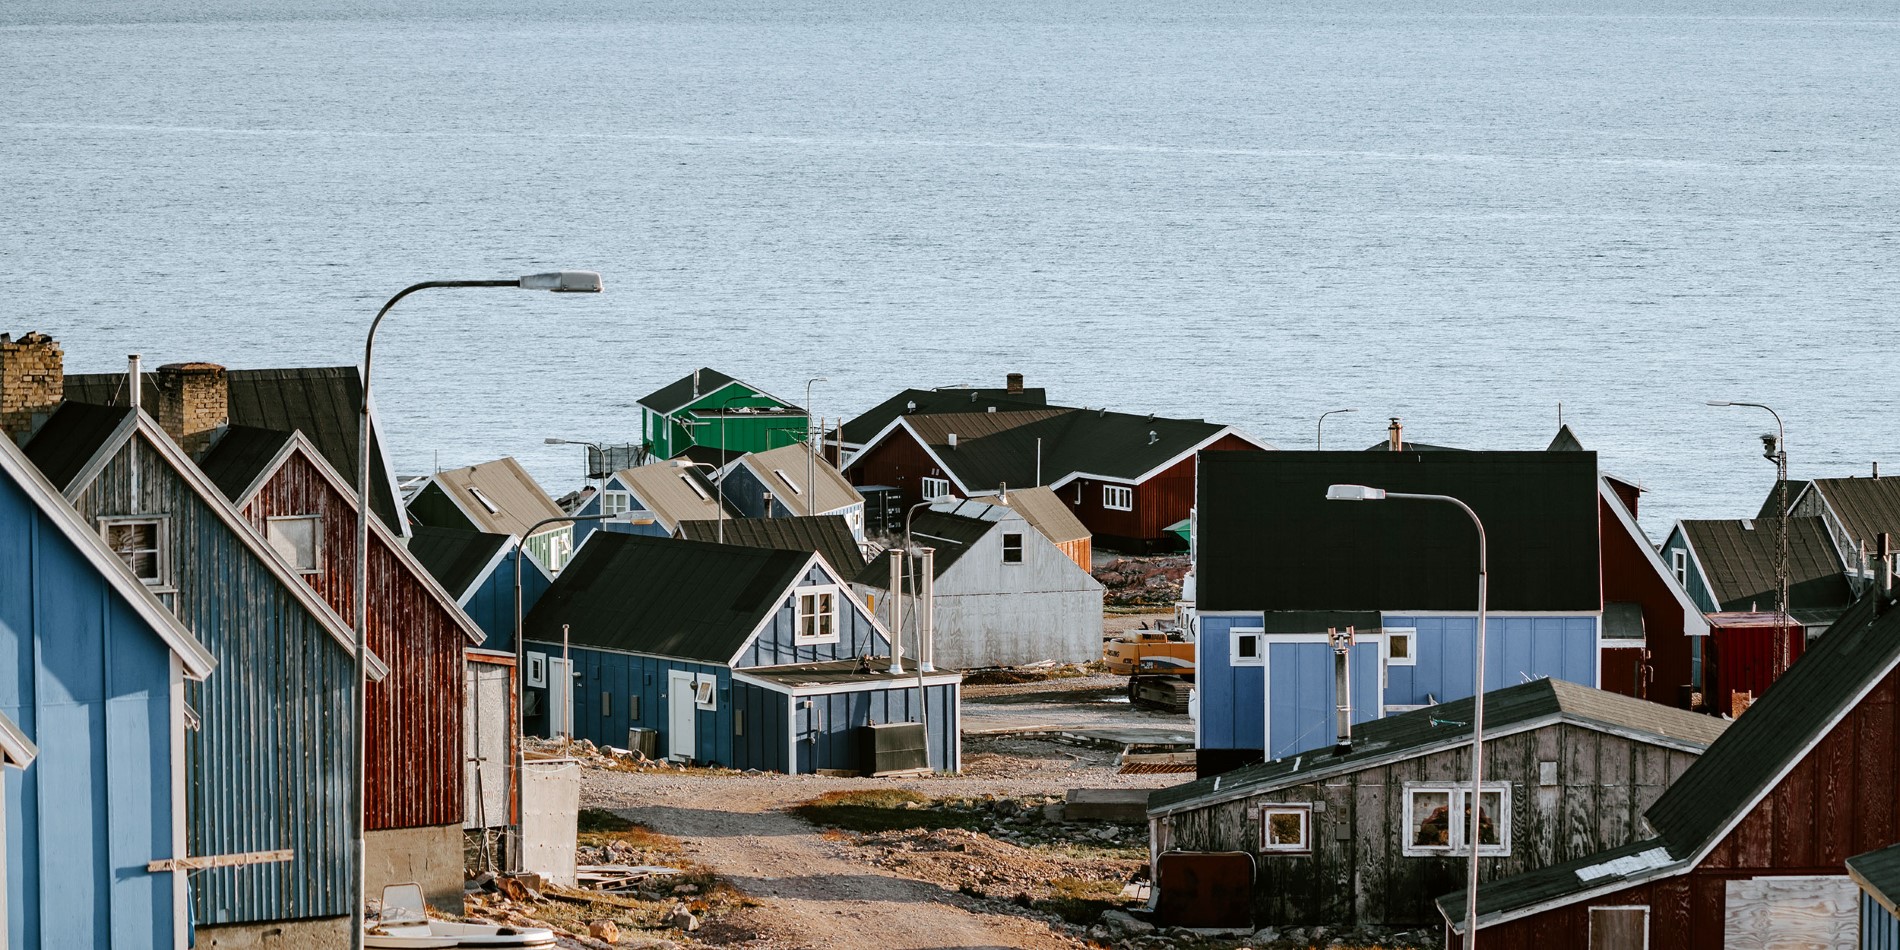 Get a taste of remote Greenland life.